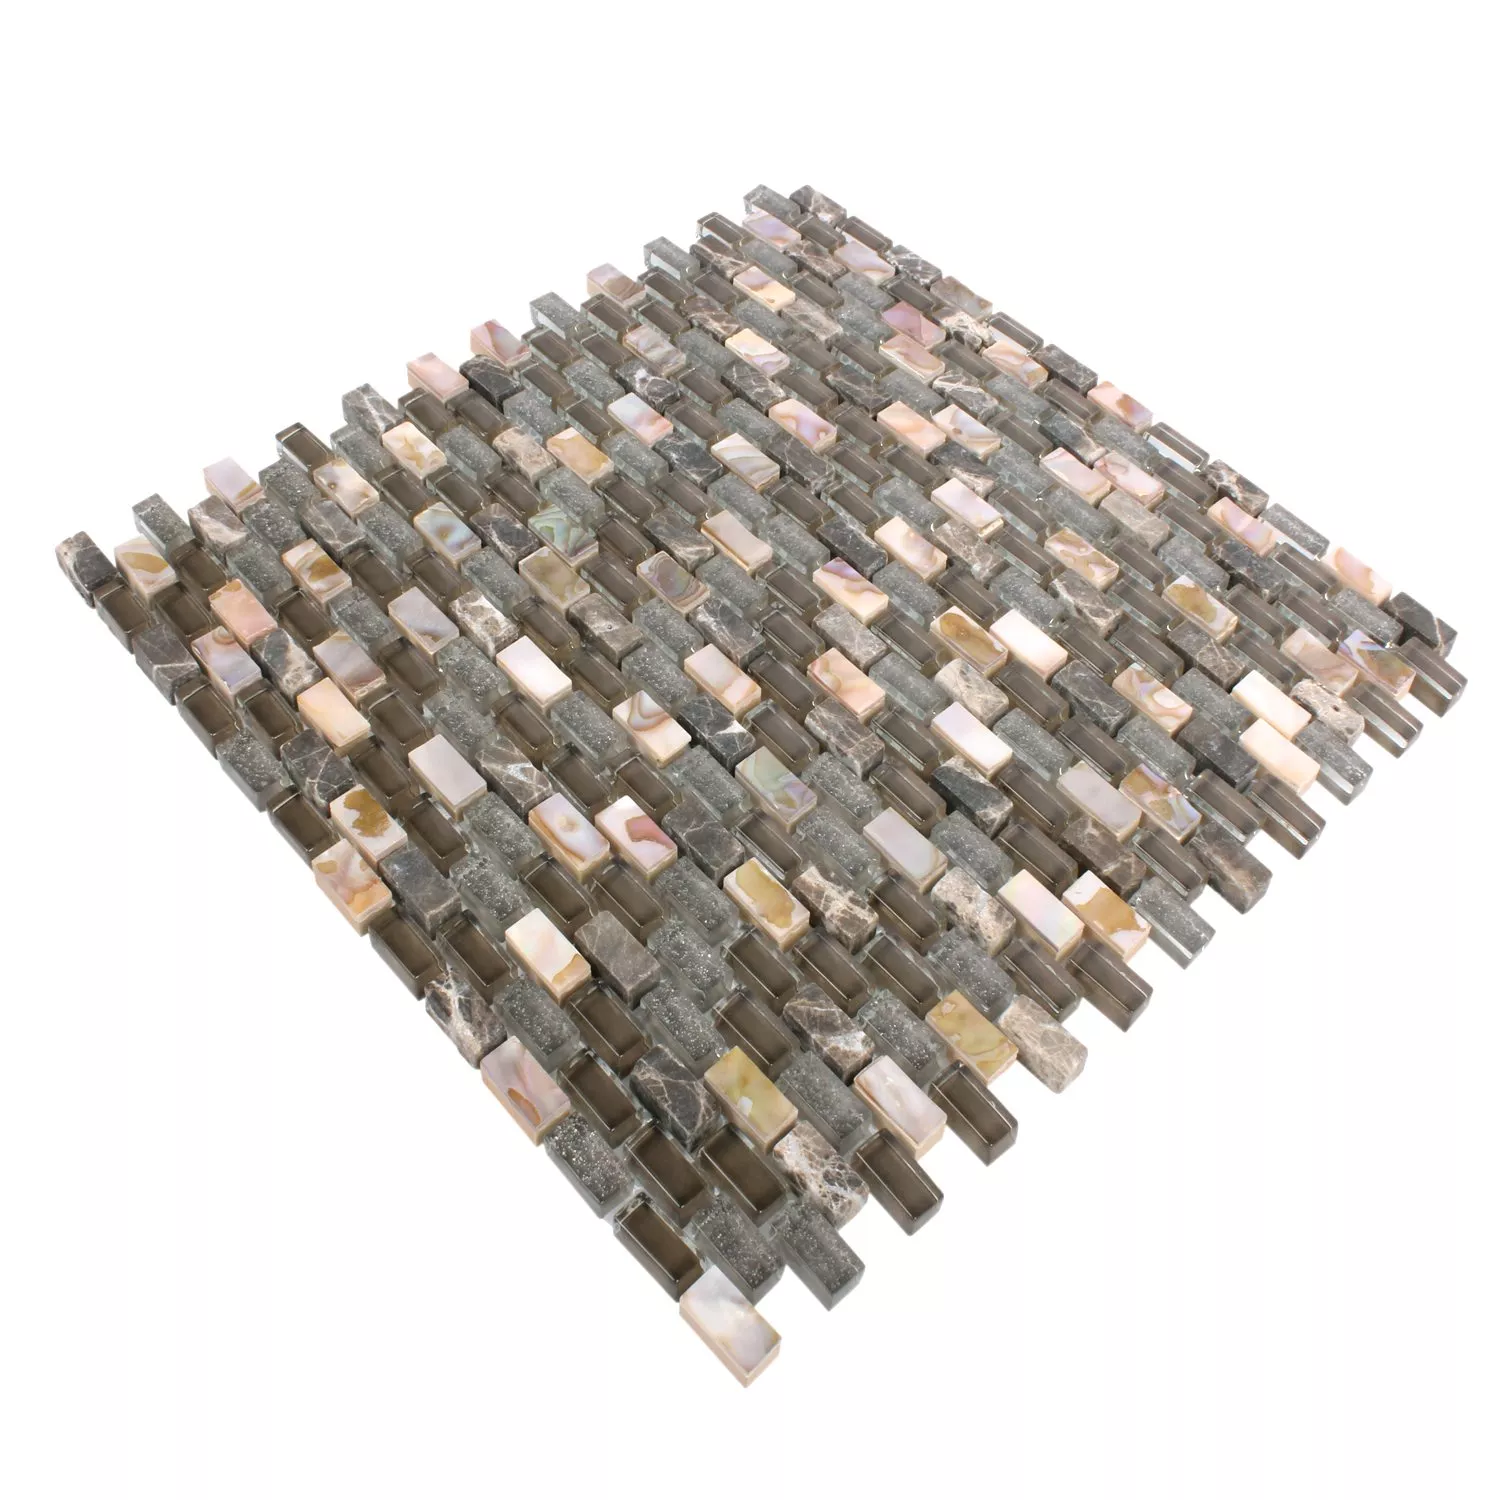 Sample Mosaic Tiles Shell Glass Natural Stone Jasmina Dark Brown